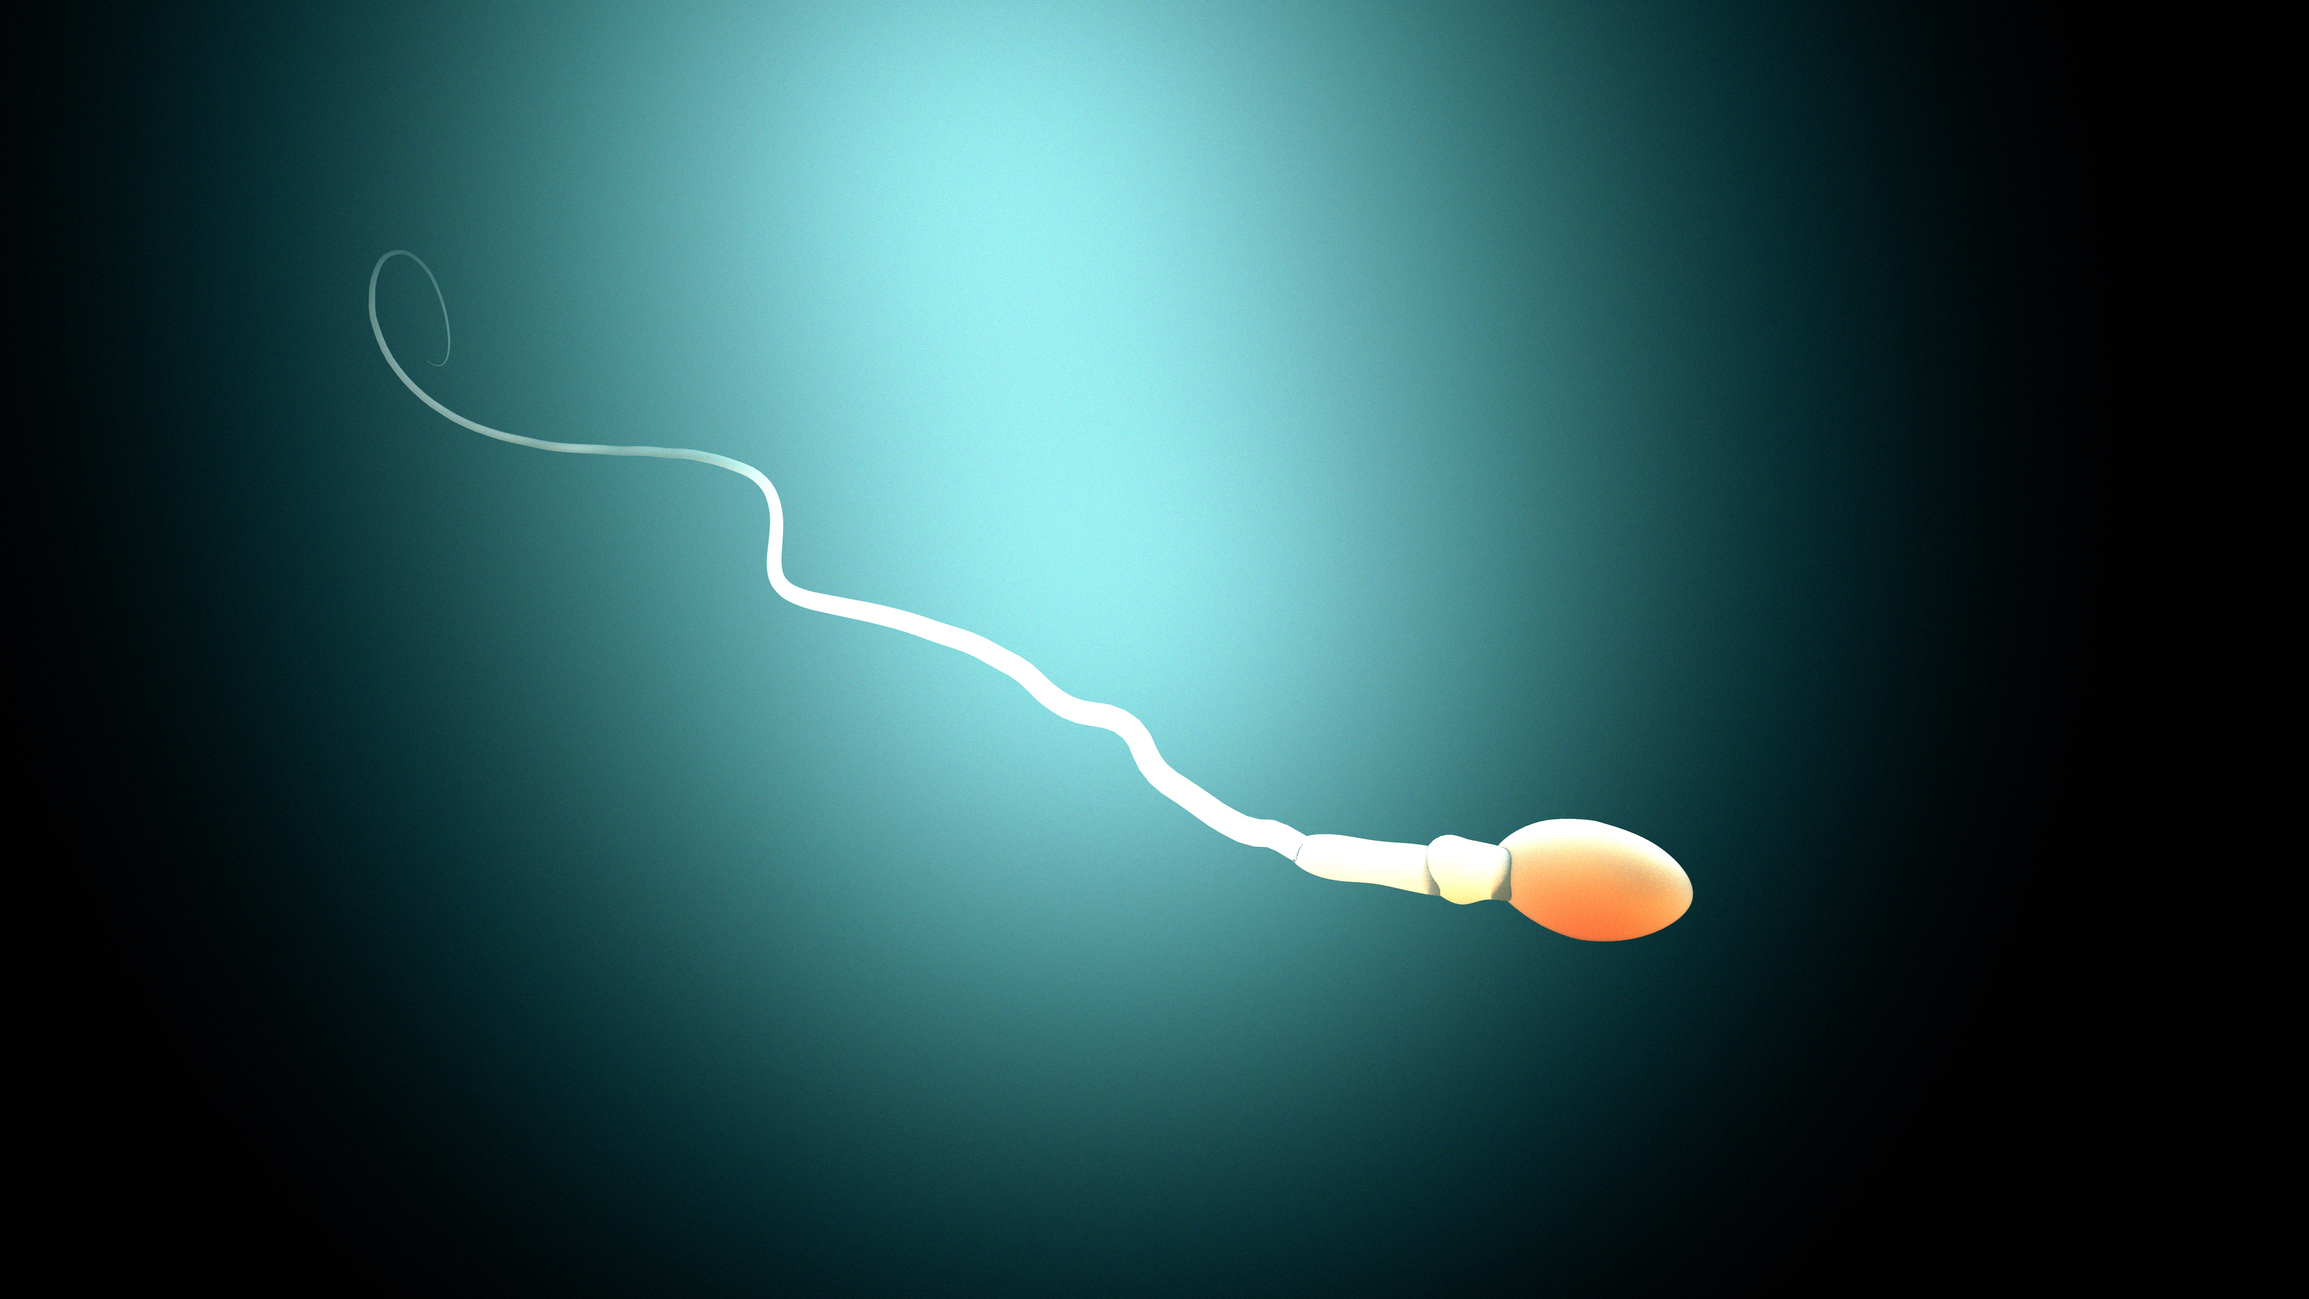 Medical Sperm